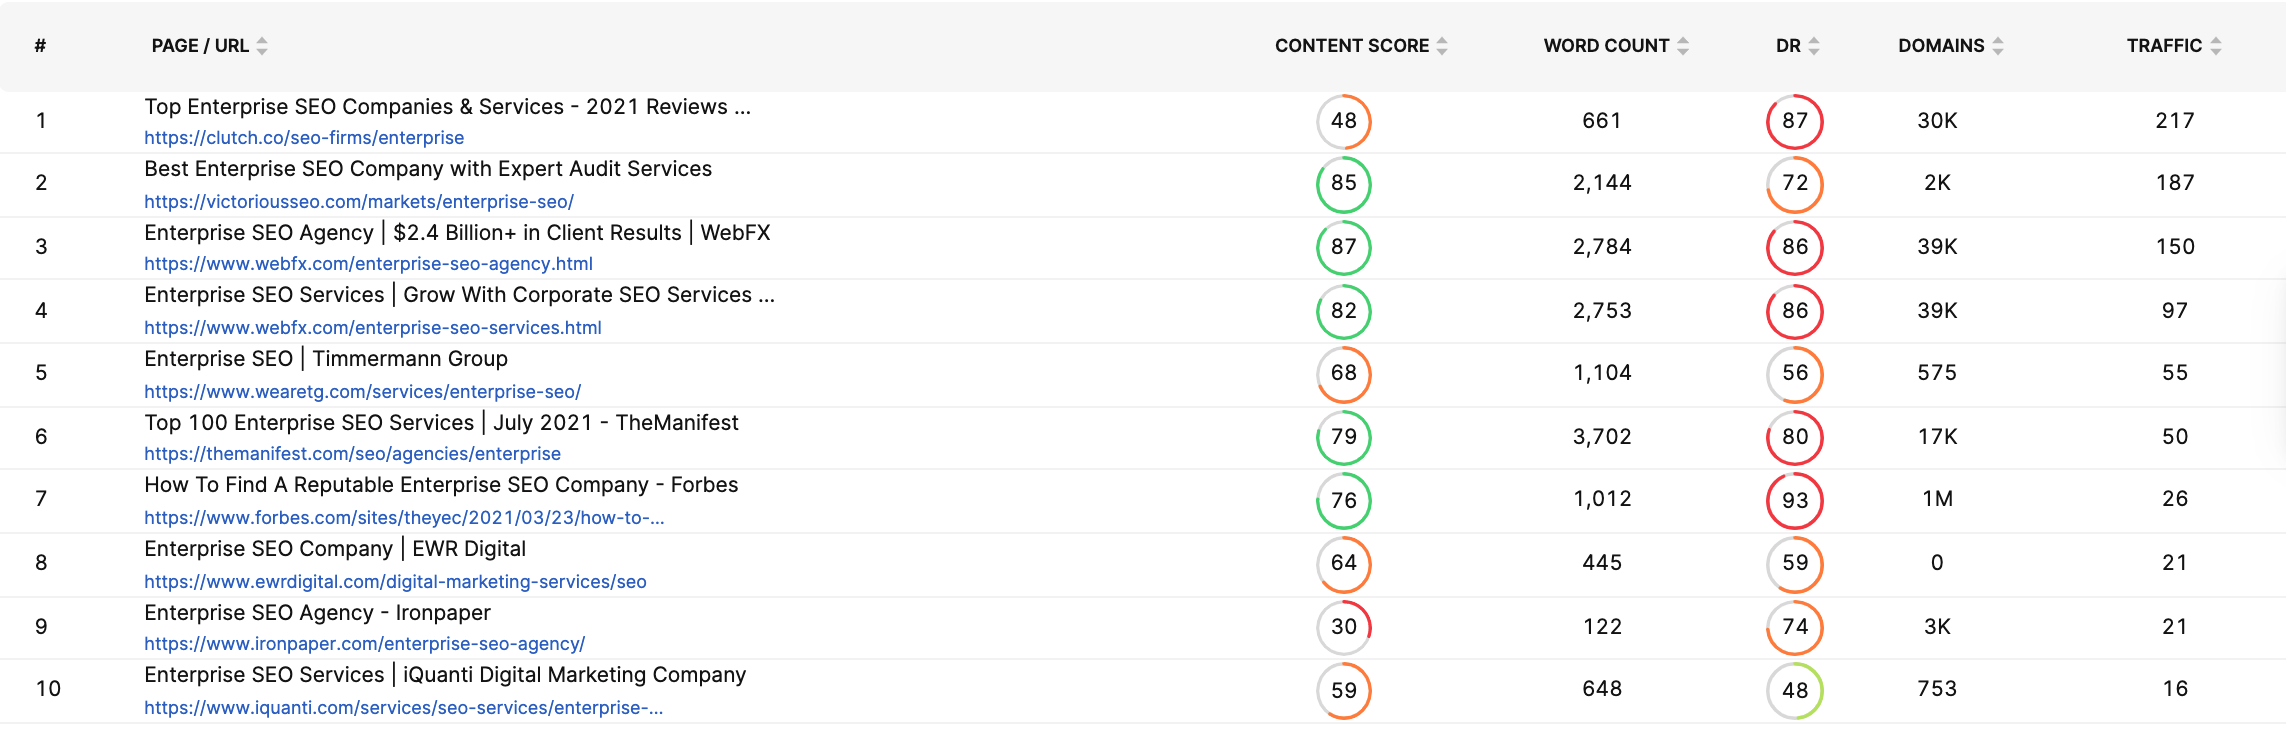 Top-Ranking Content for the Keyword "Enterprise SEO"